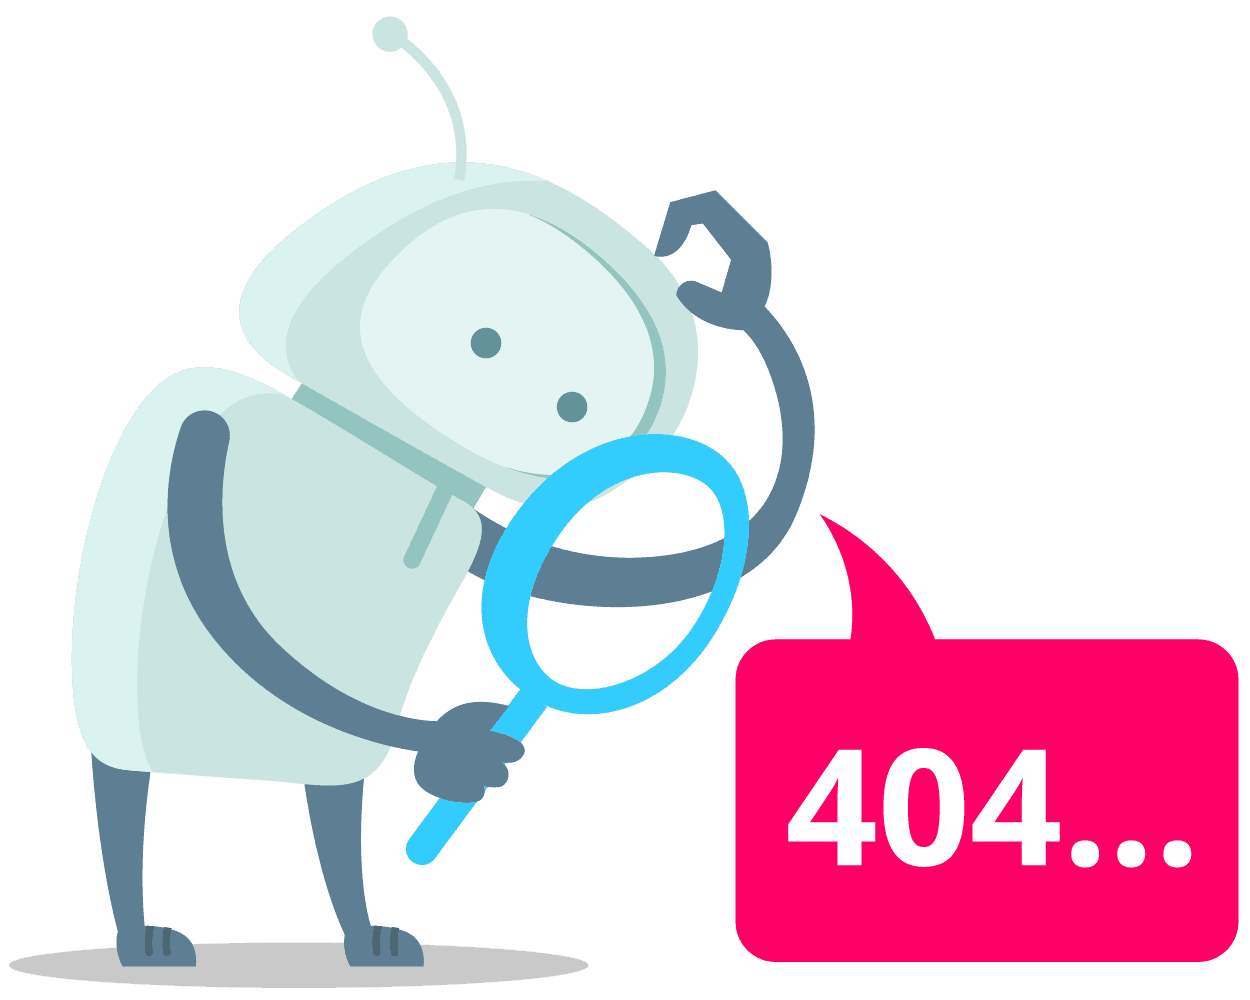 De 404-robot